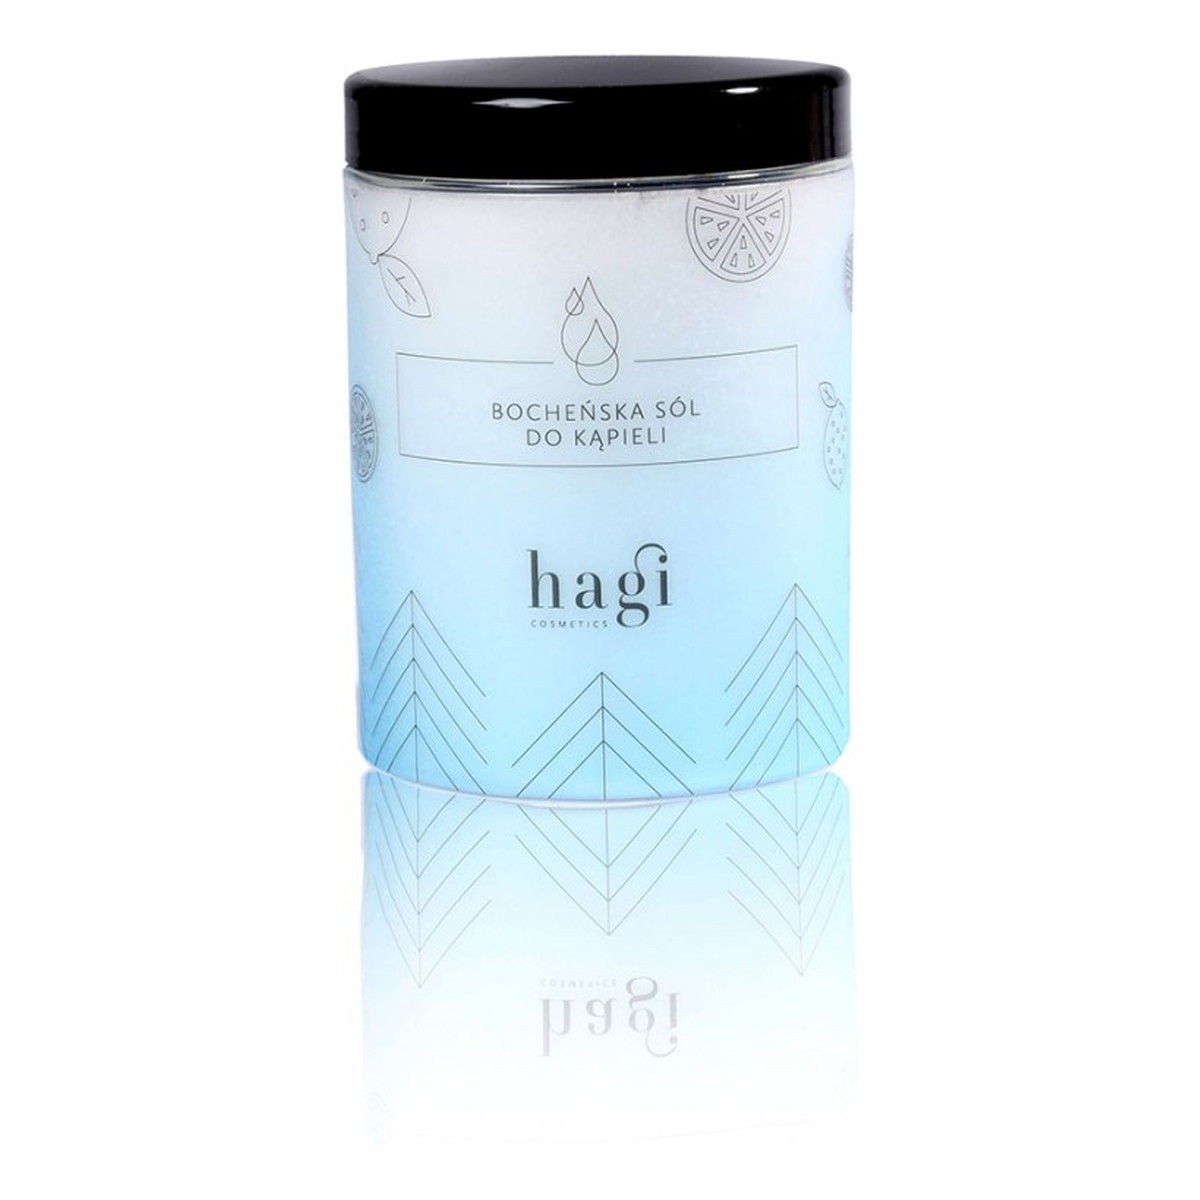 Hagi BOCHEŃSKA sól do kąpieli 1300g